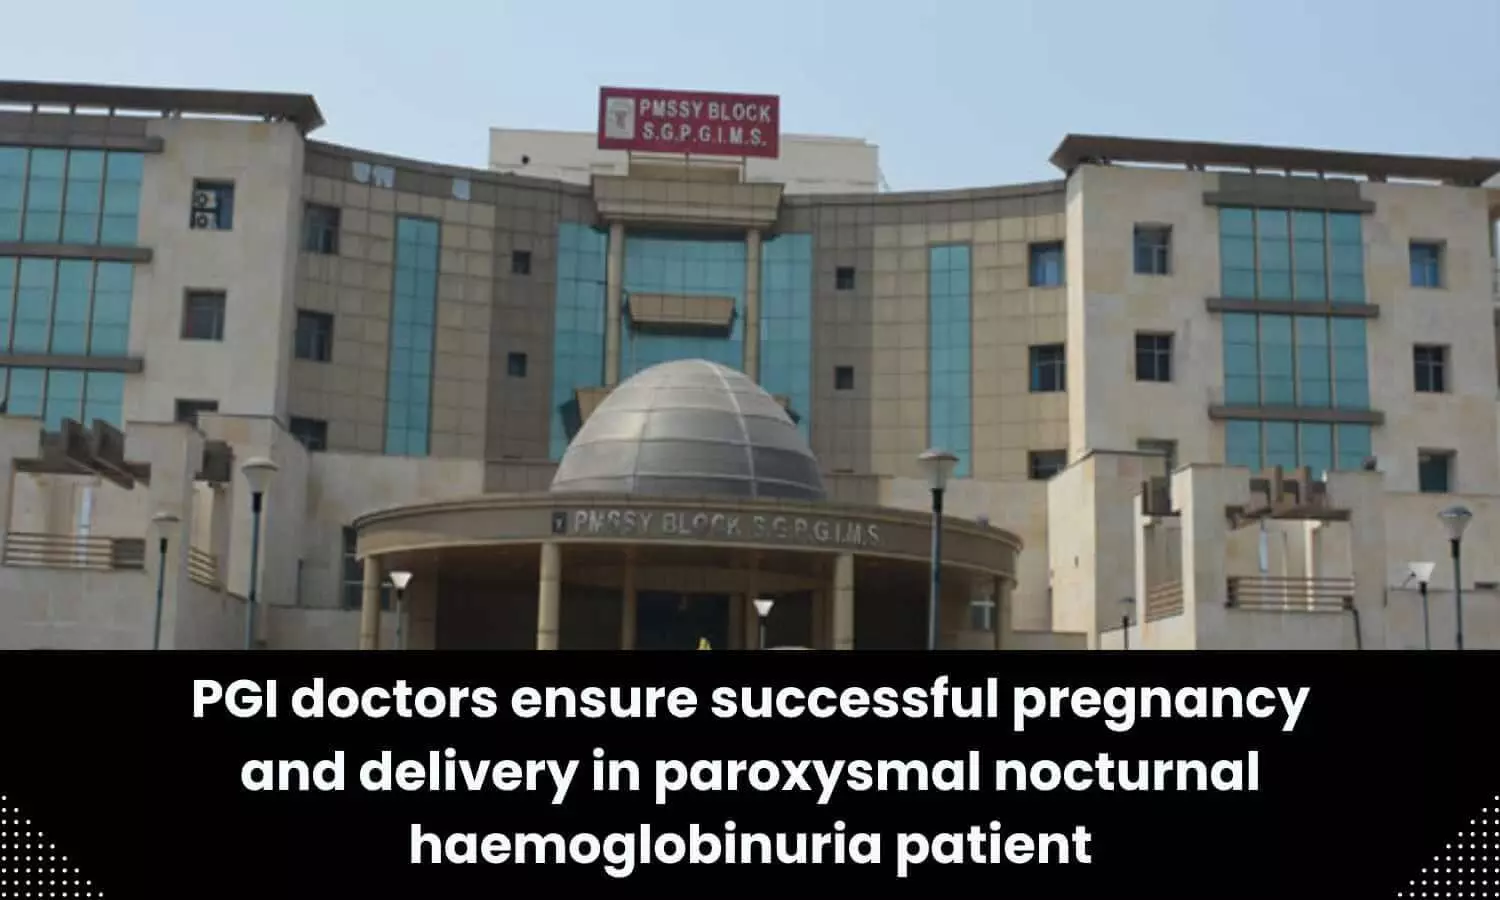 Doctors at SGPGIMS ensure successful pregnancy, delivery in paroxysmal nocturnal haemoglobinuria patient